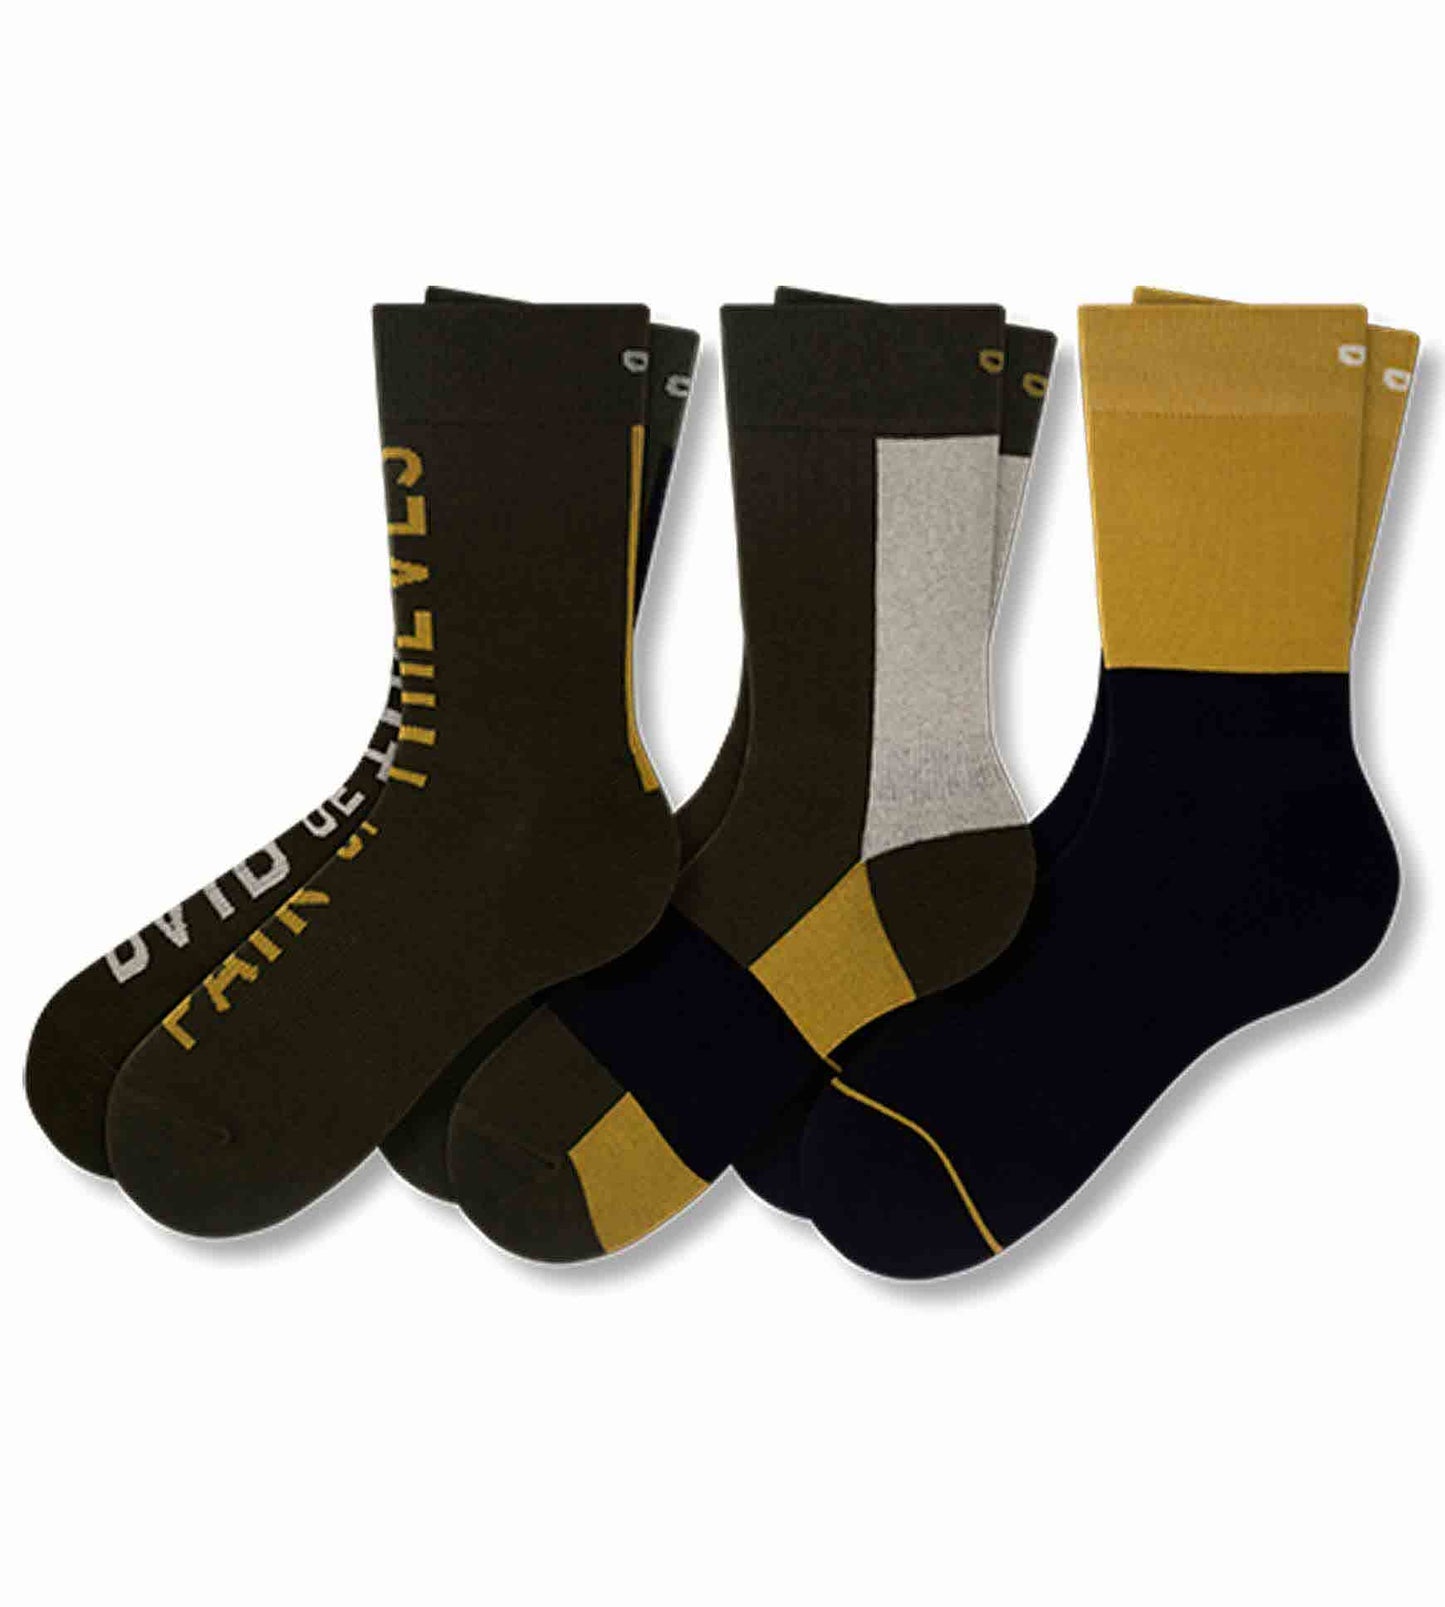 Crew Socks 3 Pack colors contain: Black, Snow, Dark goldenrod, Silver, Black, Dark Gray, Dark slate gray, Gains boro, Gray, Sienna